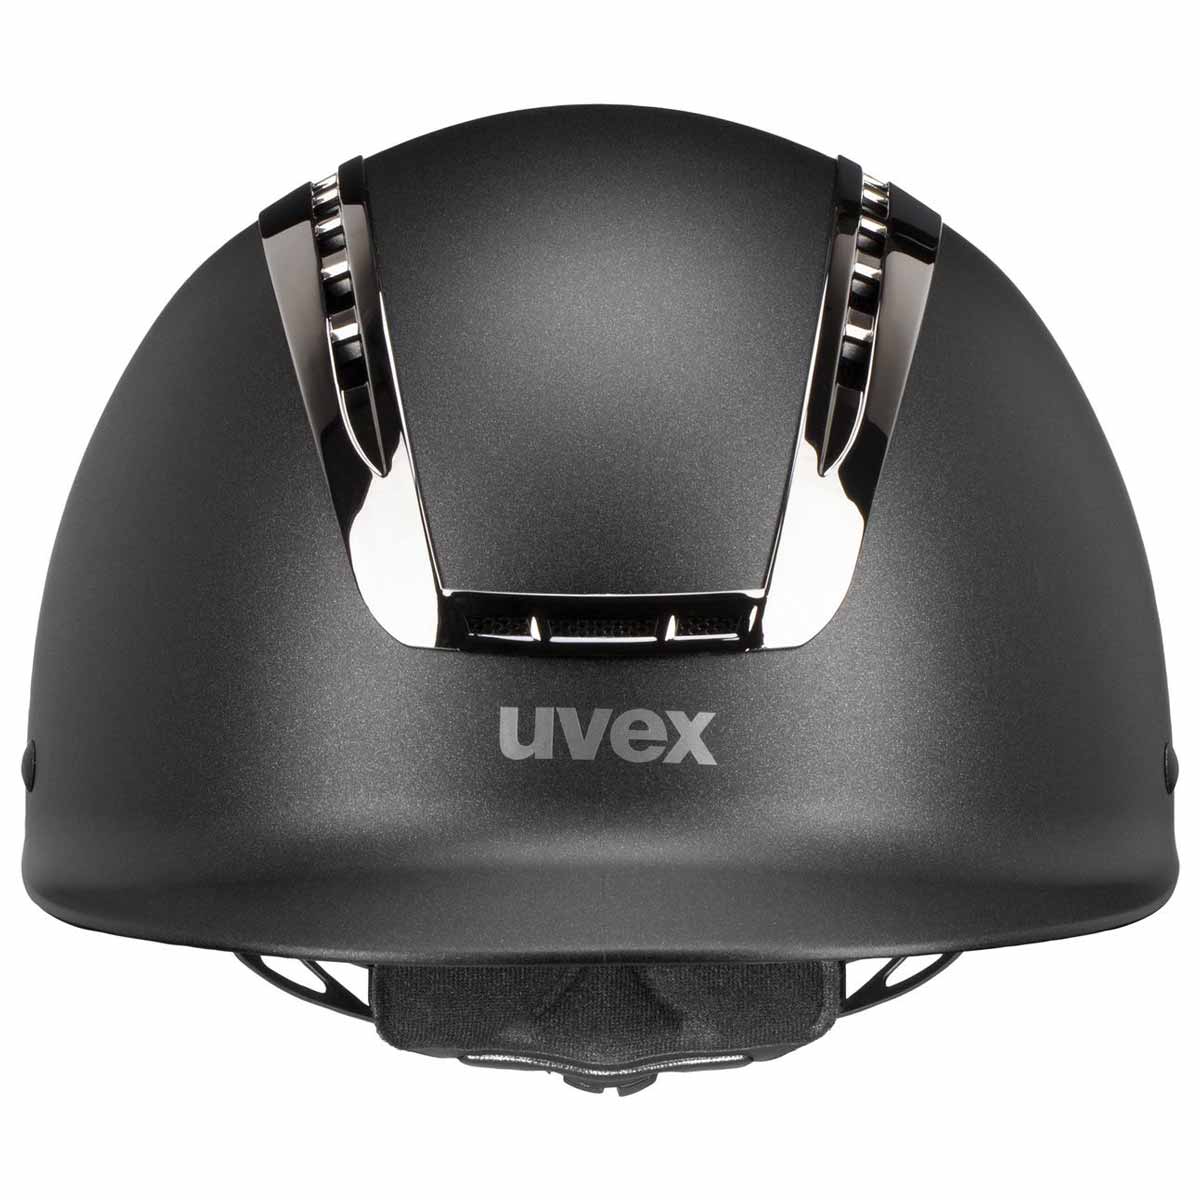 uvex suxxeed chrome riding helmet Navy matt- Koralle S